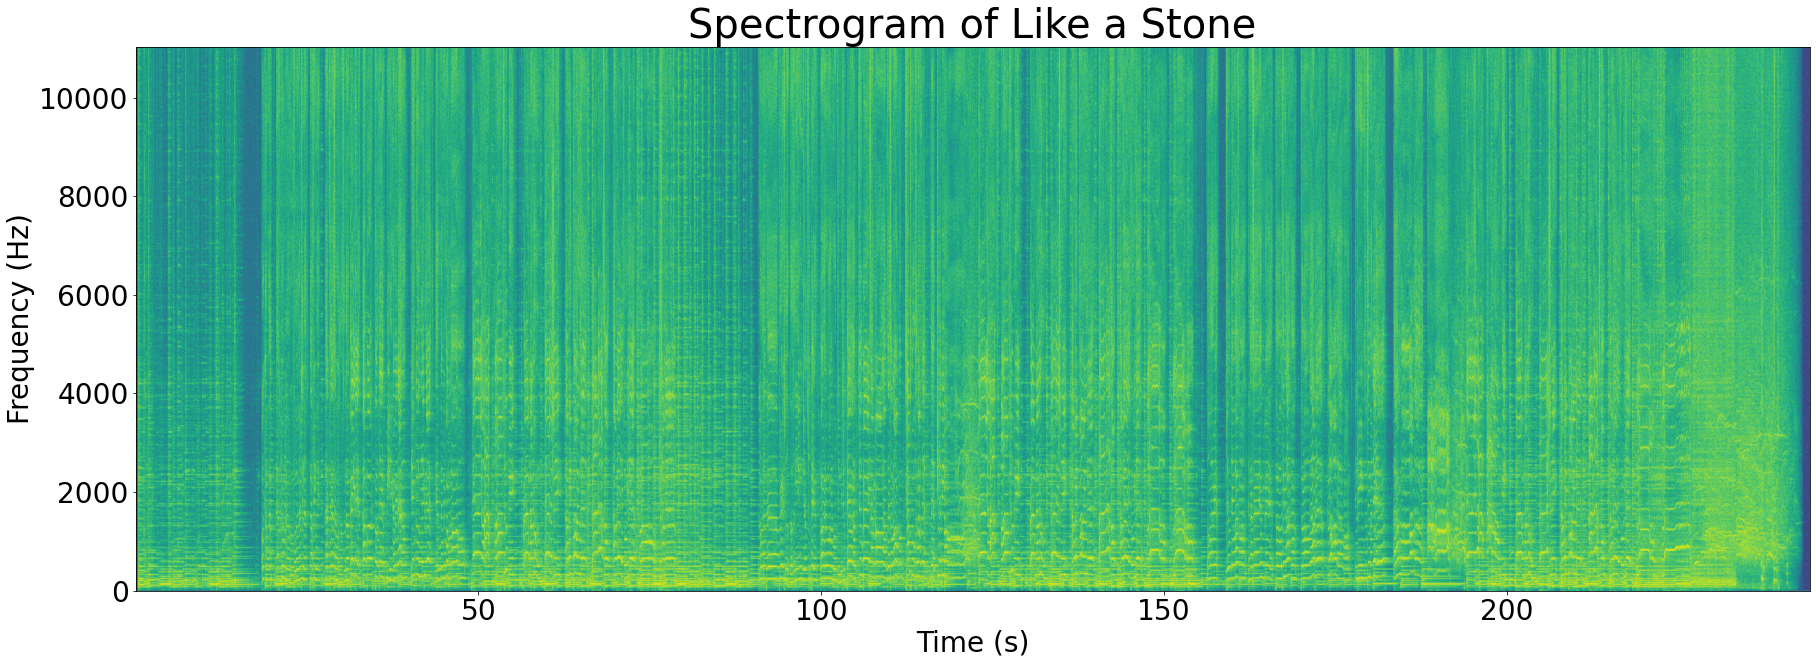 Spectrogram of Like a Stone